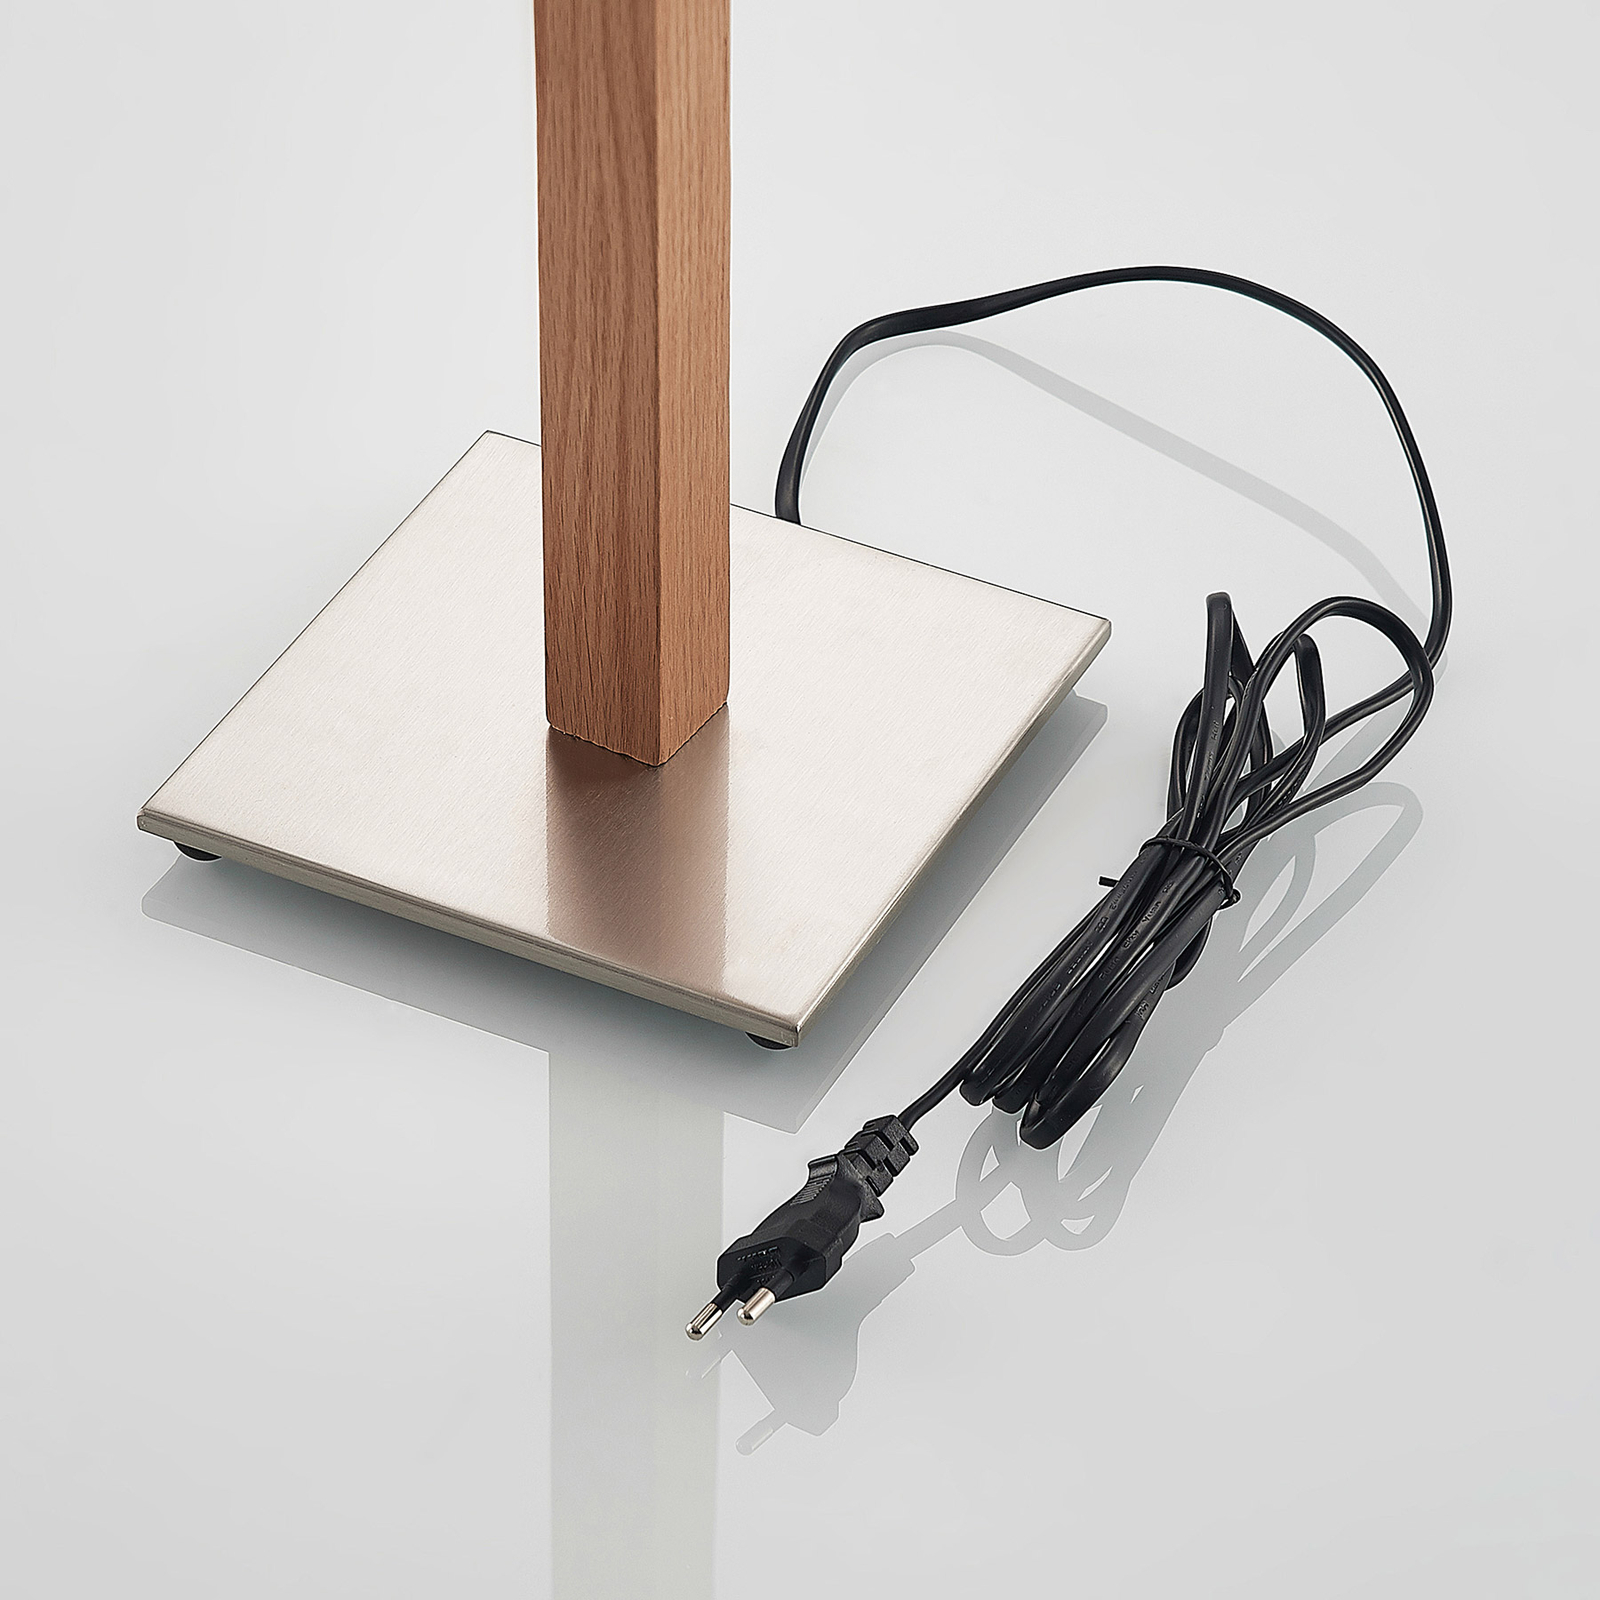 Lucande Heily table lamp, angular, white